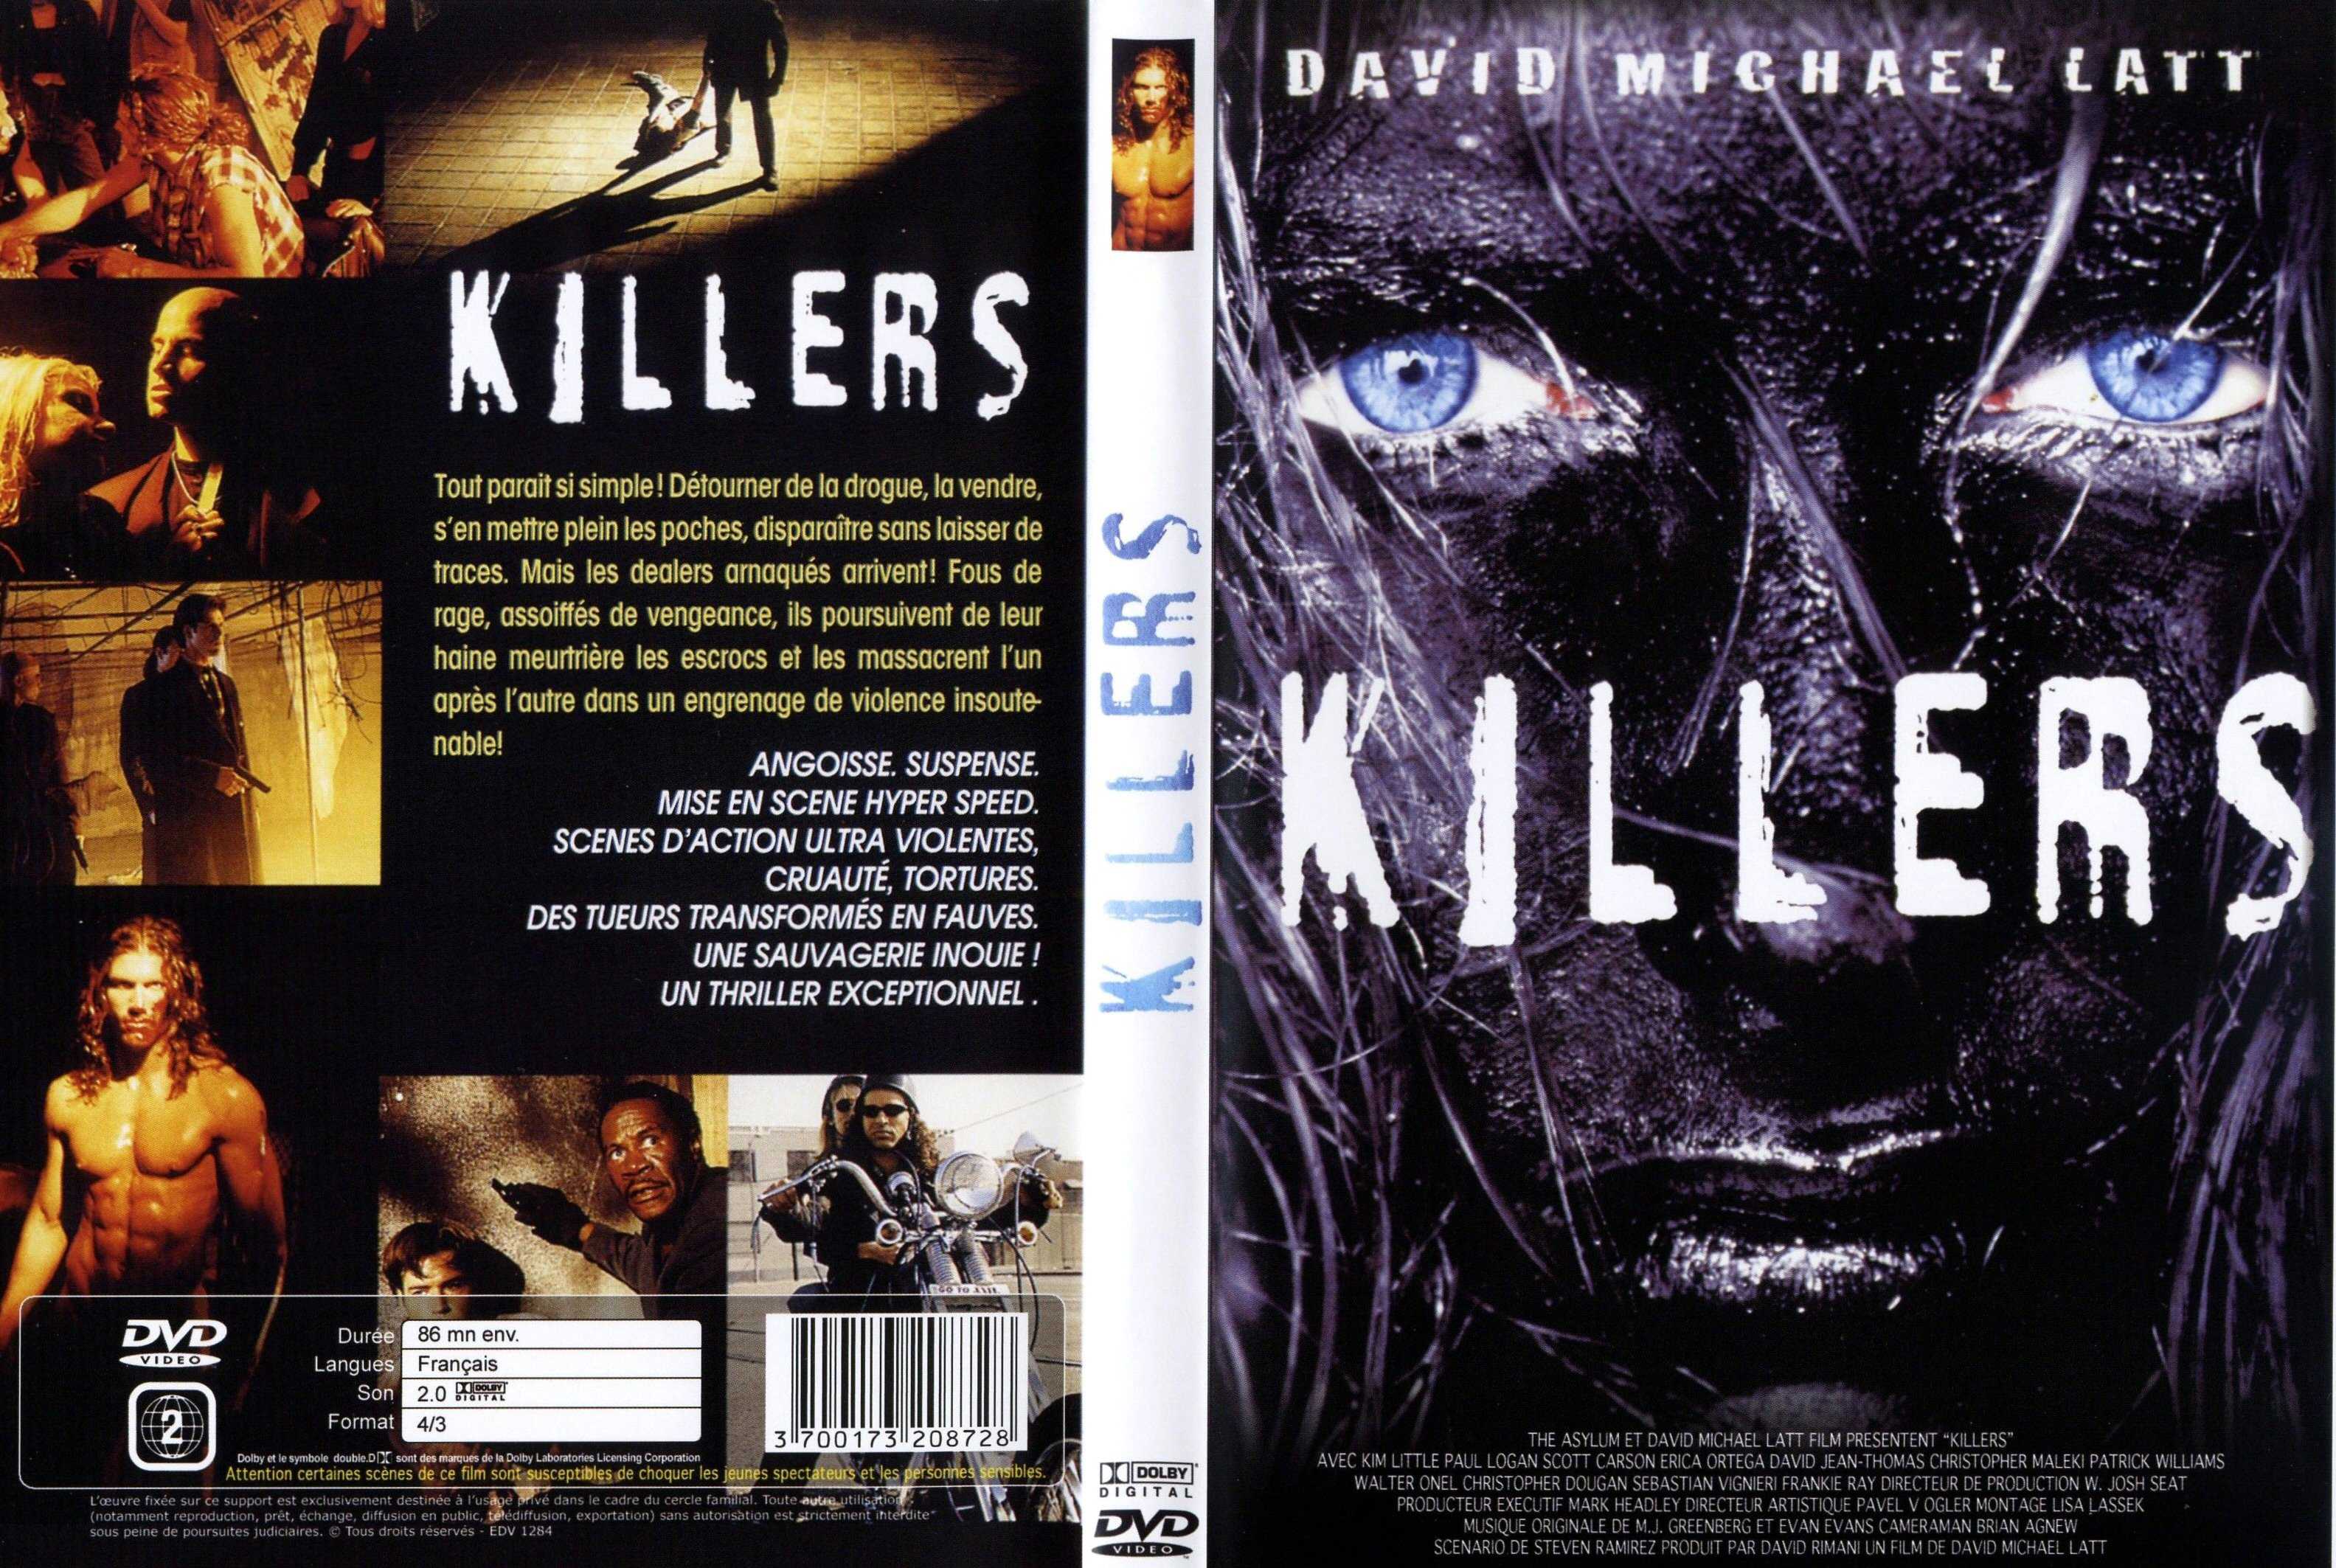 Jaquette DVD Killers